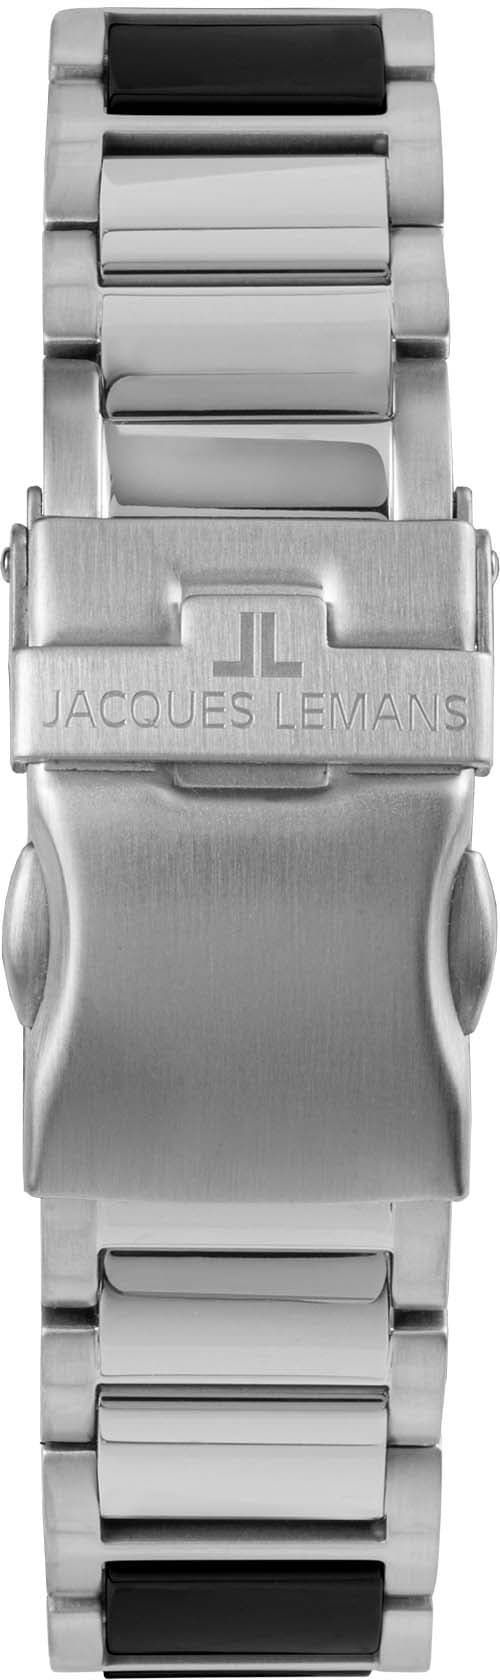 Jacques Lemans Keramikuhr »Liverpool, 42-12A«, Quarzuhr, Armbanduhr, Damenuhr, Datum